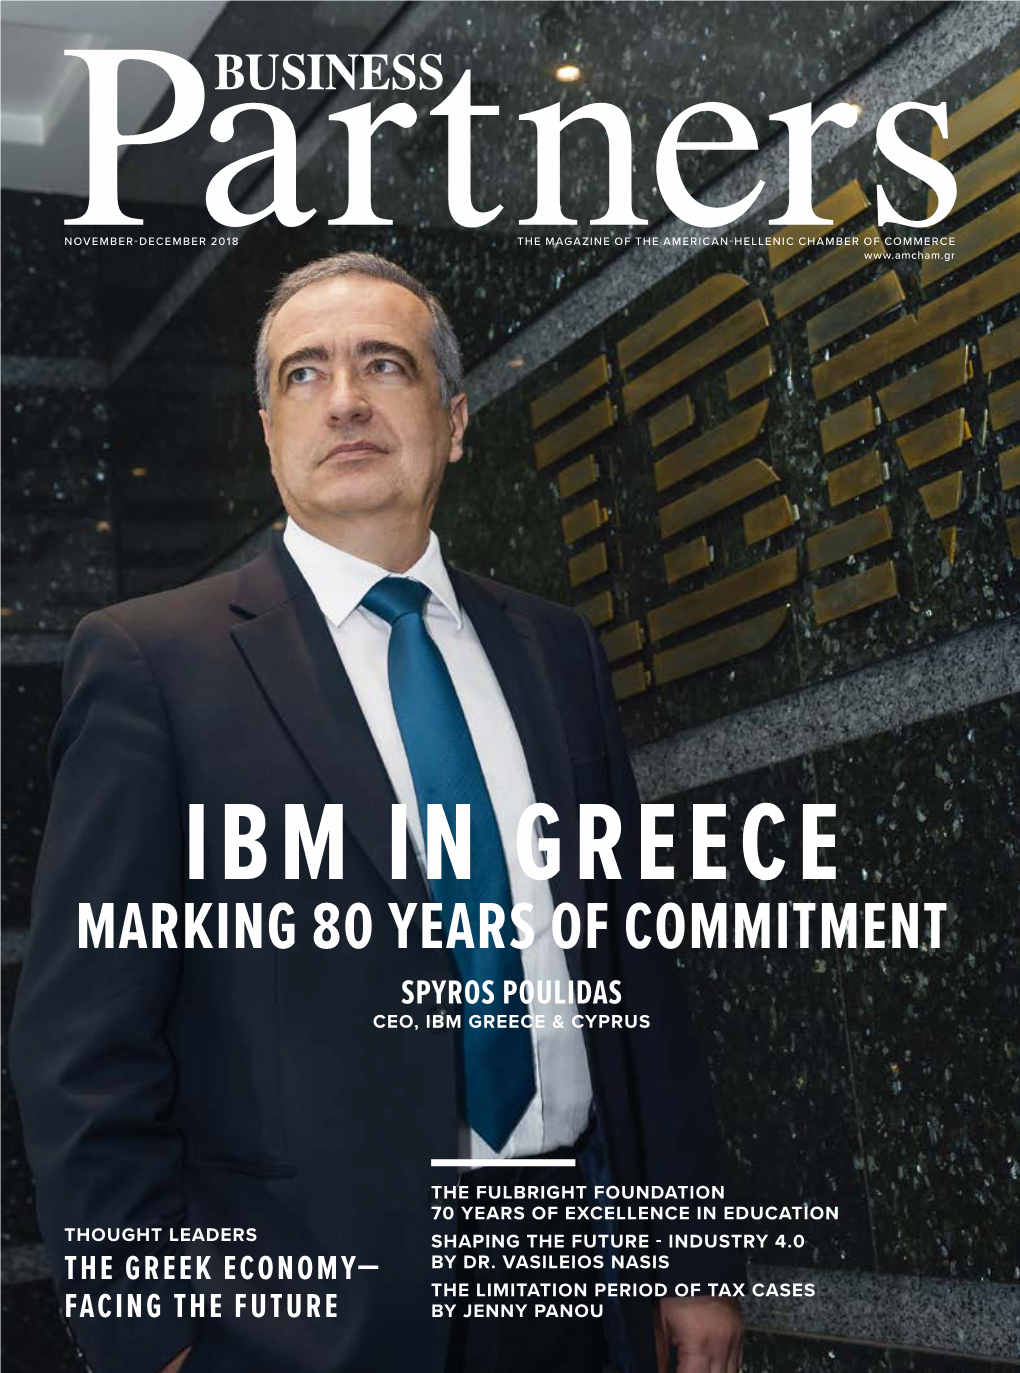 Ibm in Greece Marking 80 Years of Commitment Spyros Poulidas Ceo, Ibm Greece & Cyprus